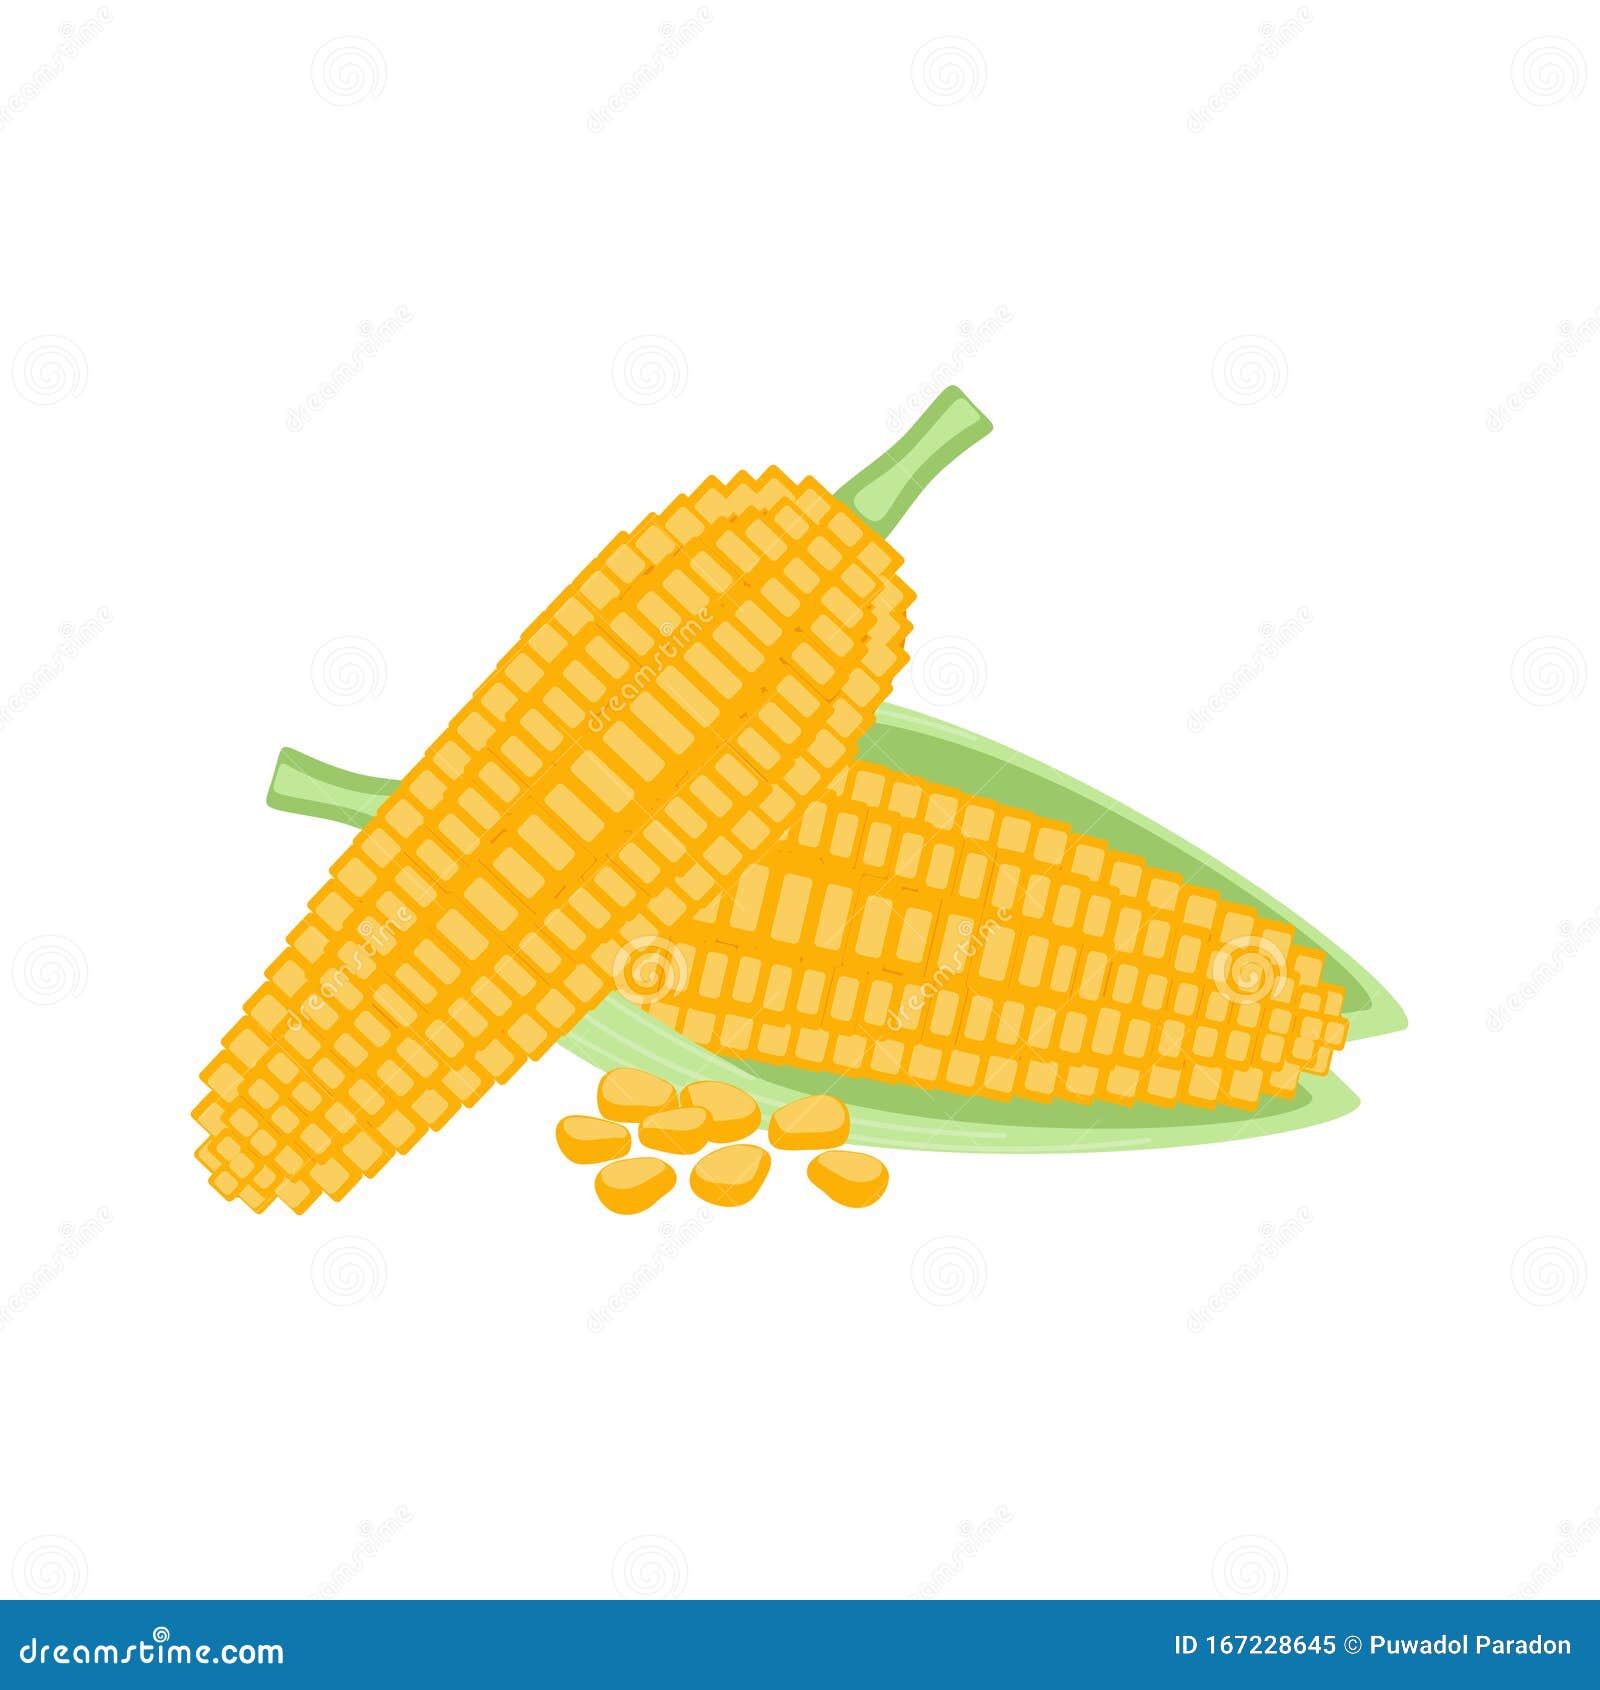 Corn Vector Illustration Design. Corn Isolated on White Stock Vector ...